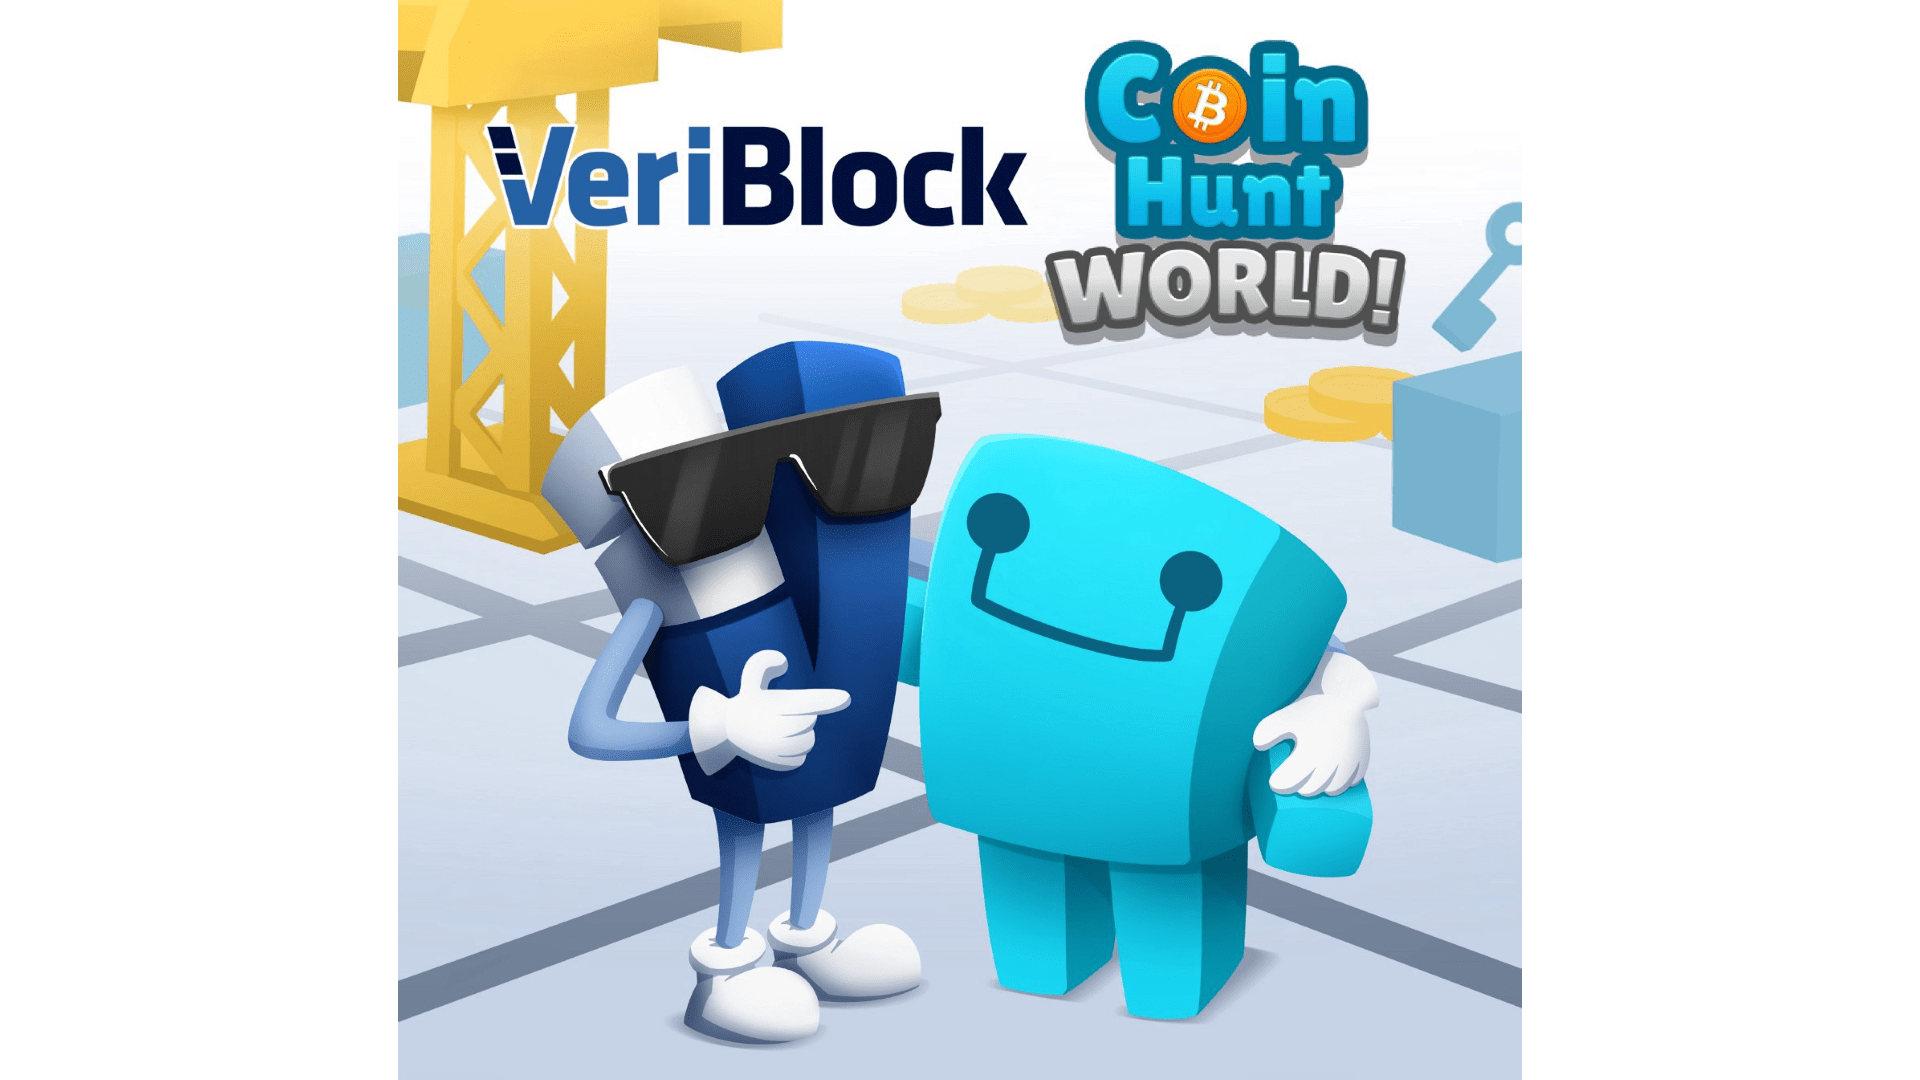 VeriBlock’s Coin Hunt World! Event Successful